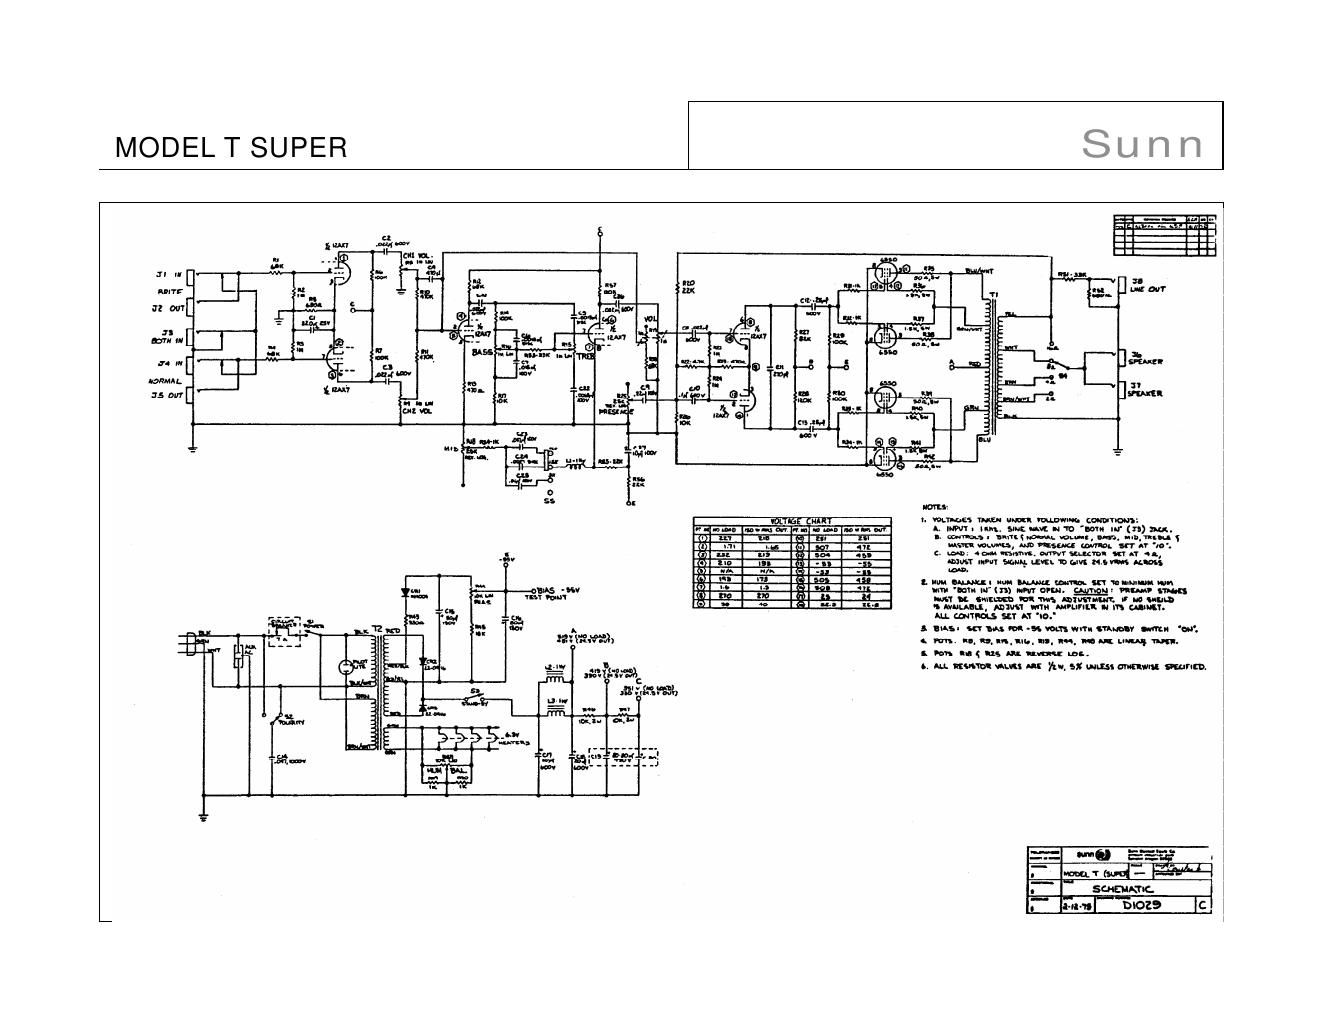 sunn model t super schematic